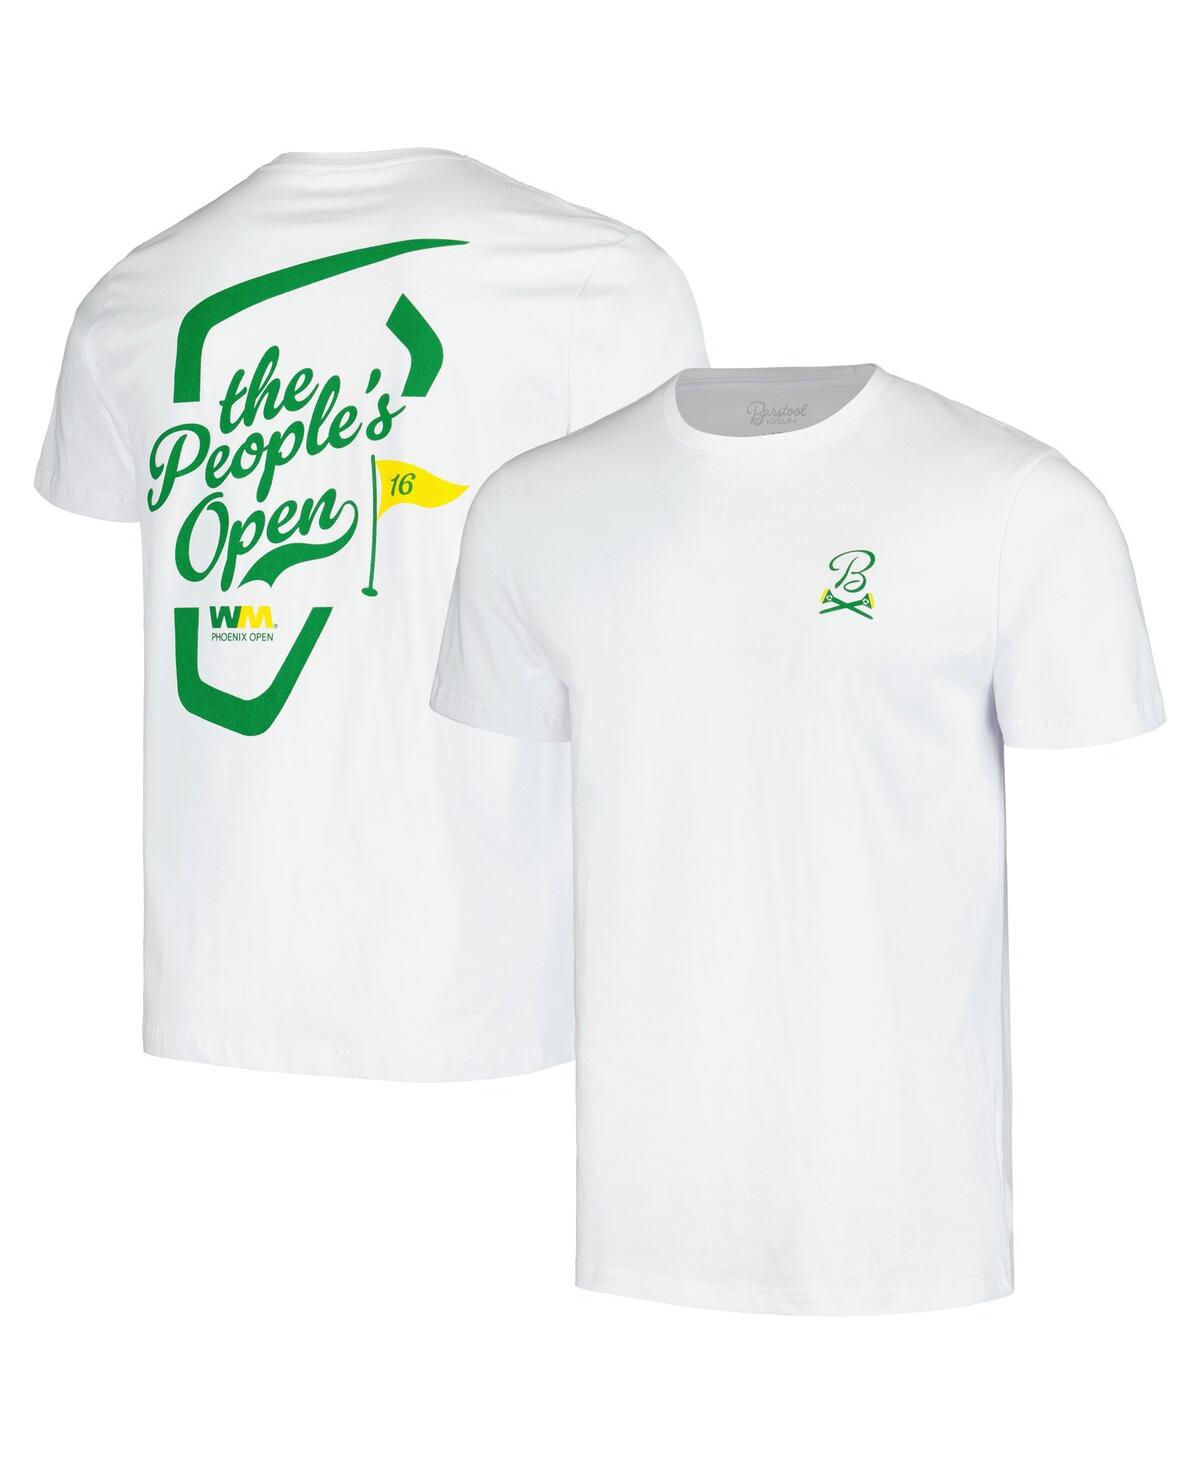 Men's Barstool Golf White Wm Phoenix Open The People's Open T-Shirt - White